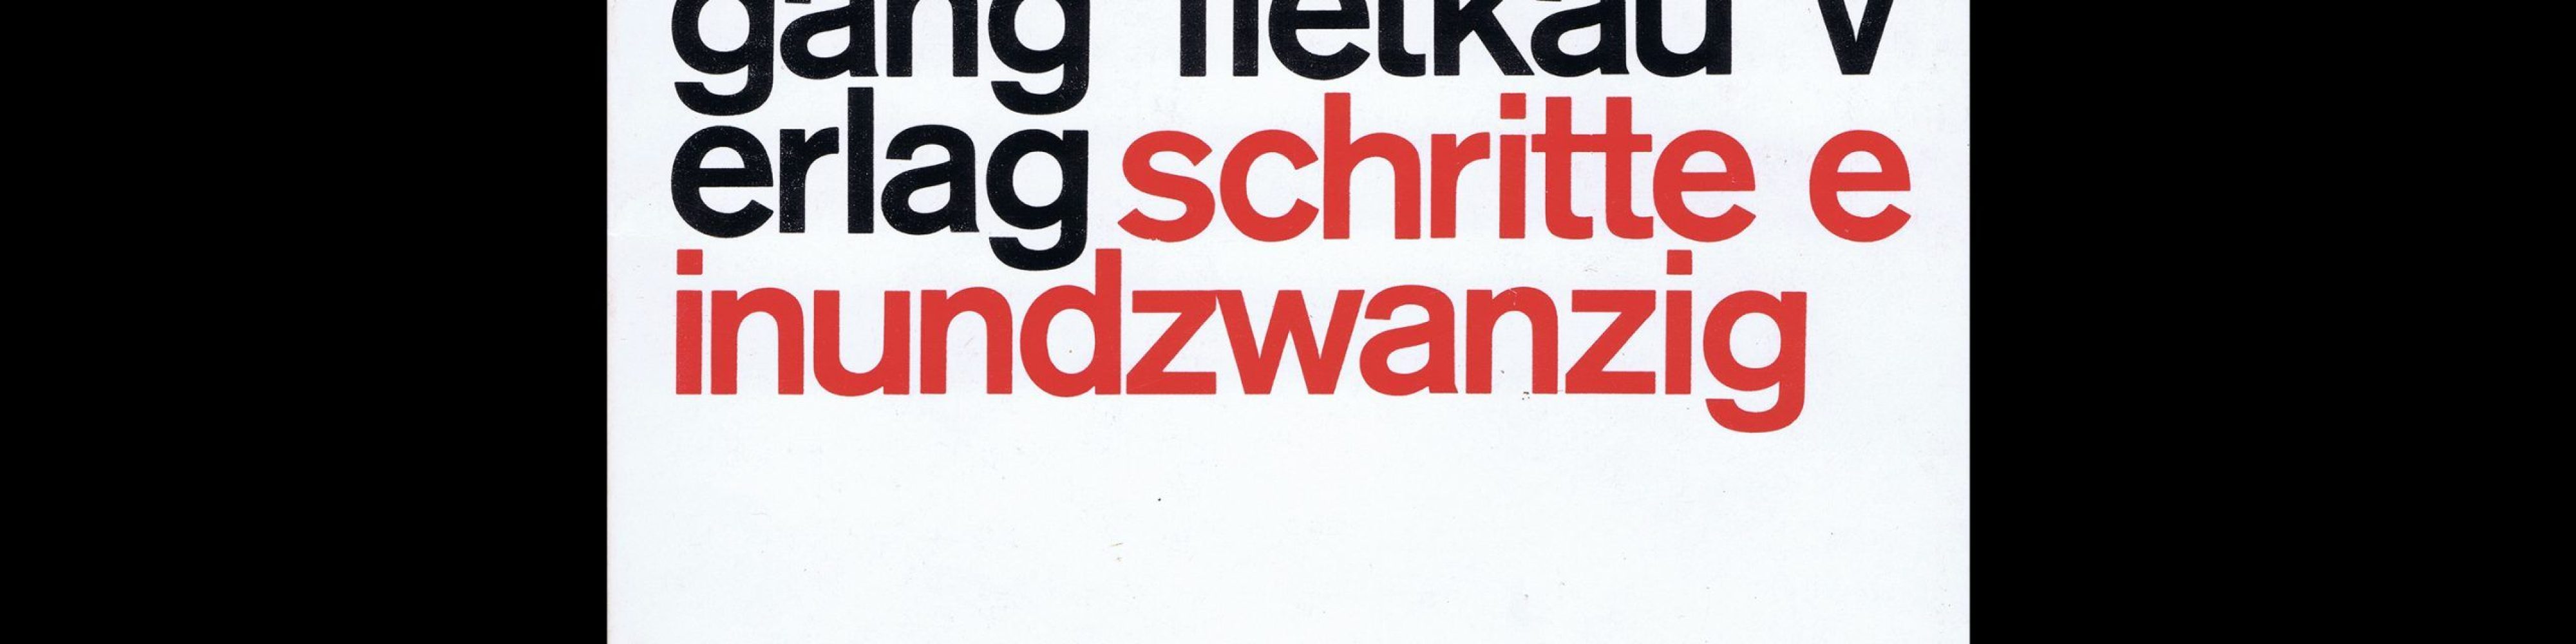 Aldona Gustas, Worterotik, Wolfgang Fietkau Verlag, 1971. Designed by Christian Chruxin